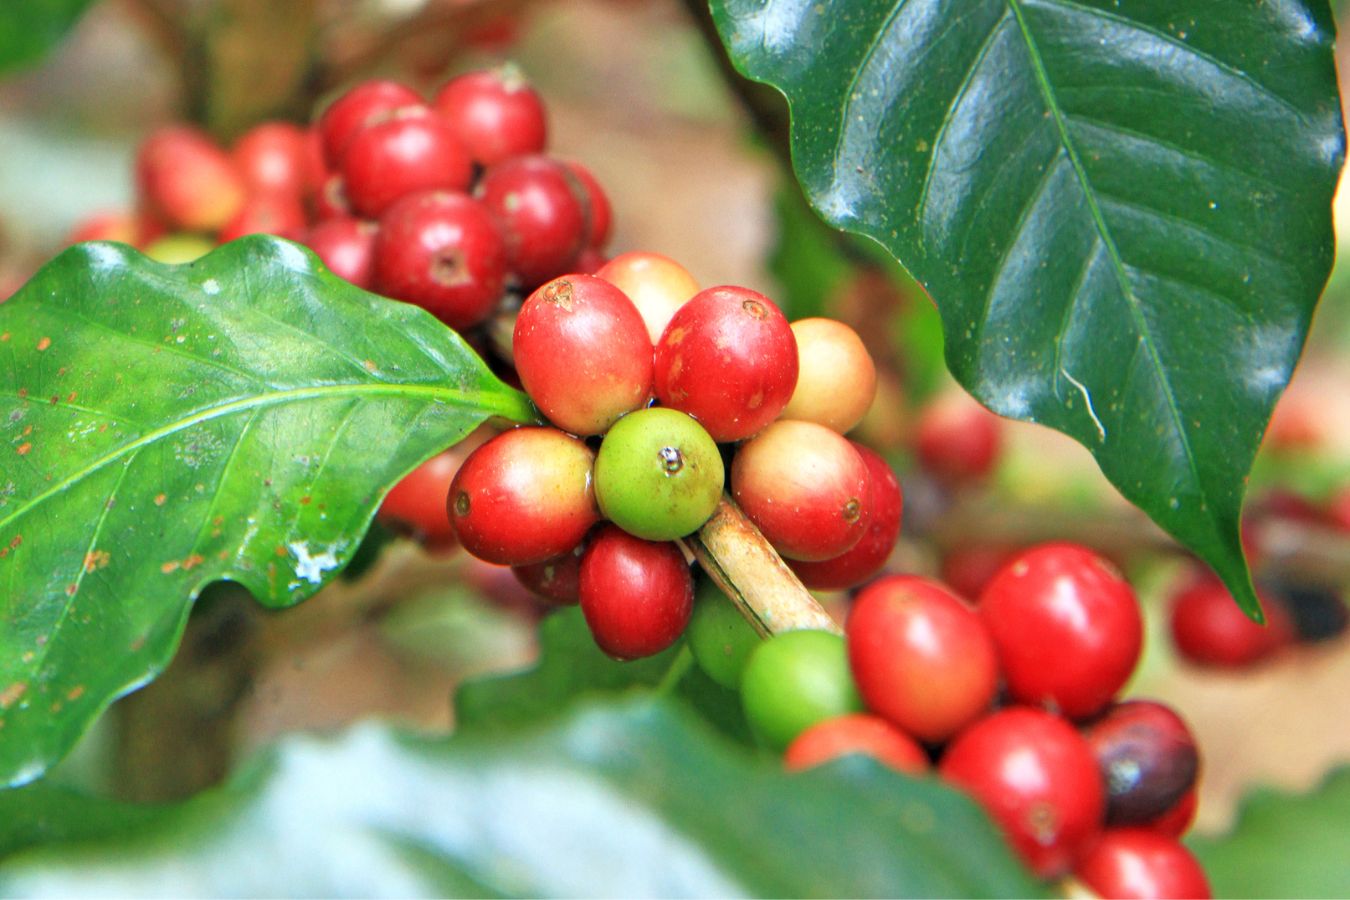 Coffee Price Today October 24, 2022 - Helena Coffee Vietnam